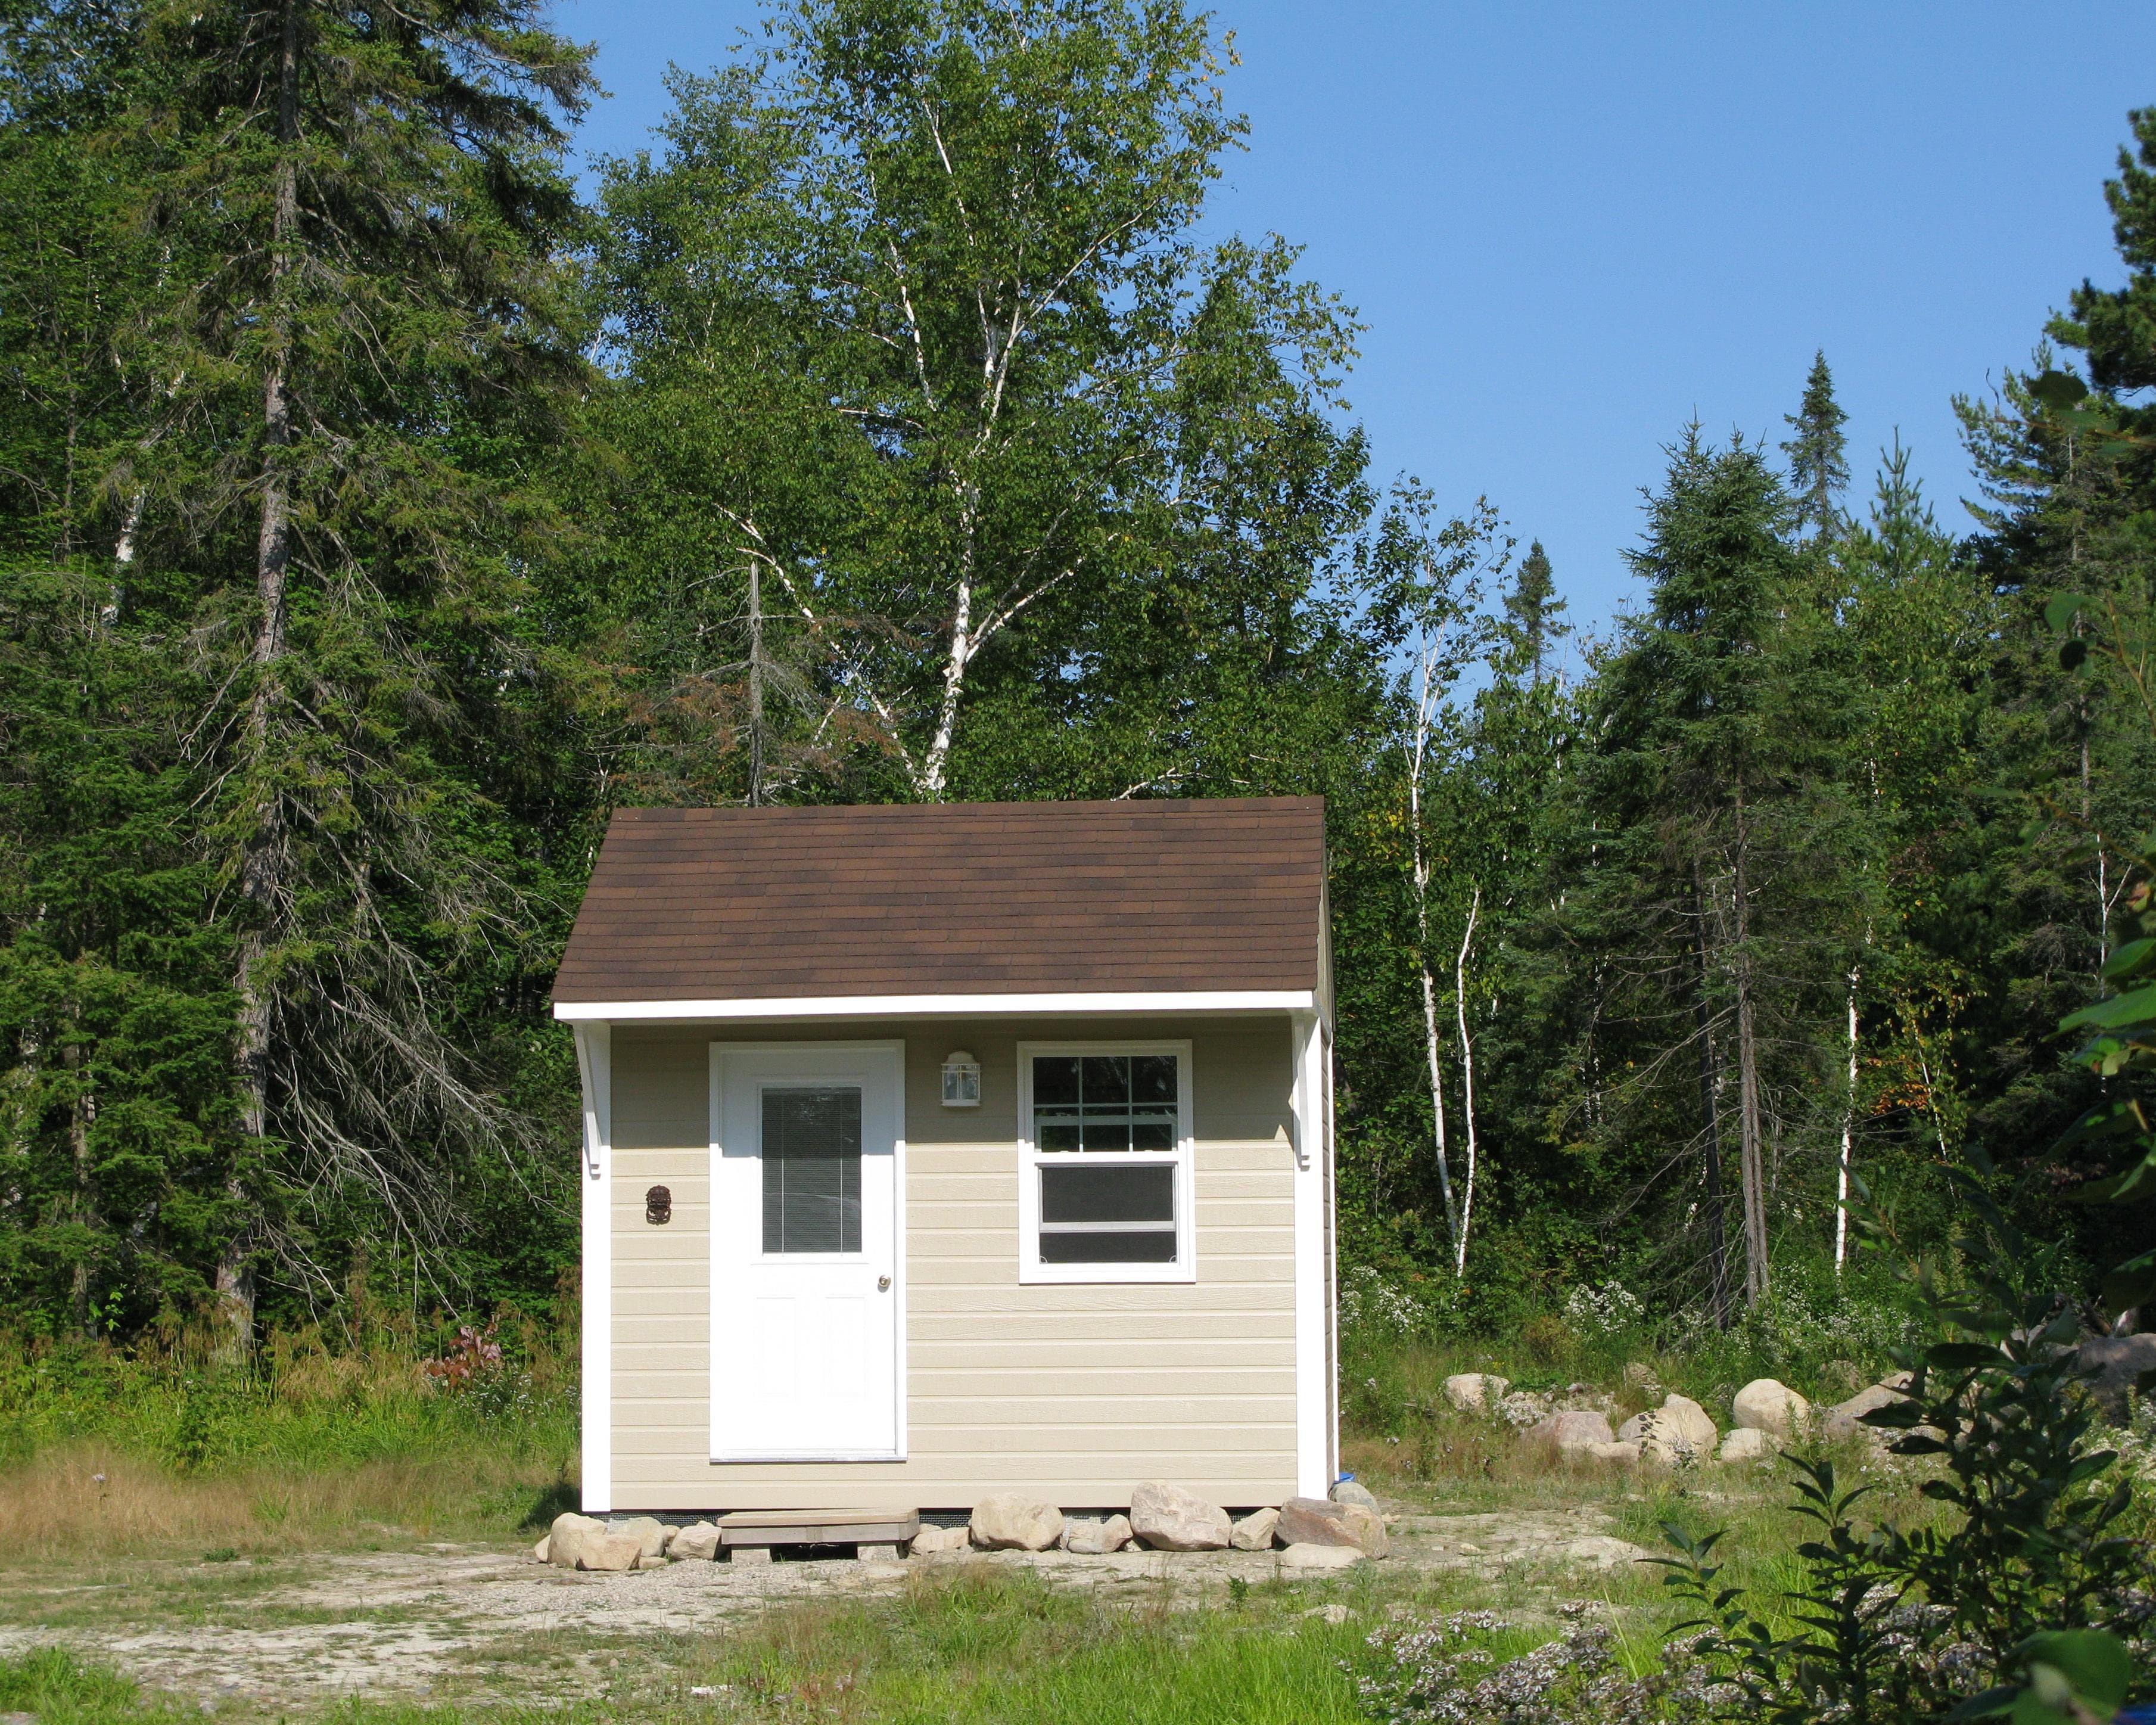 Glen Echo 12x12 garden shed with sliding window in Noelville Ontario. ID number 90271-1